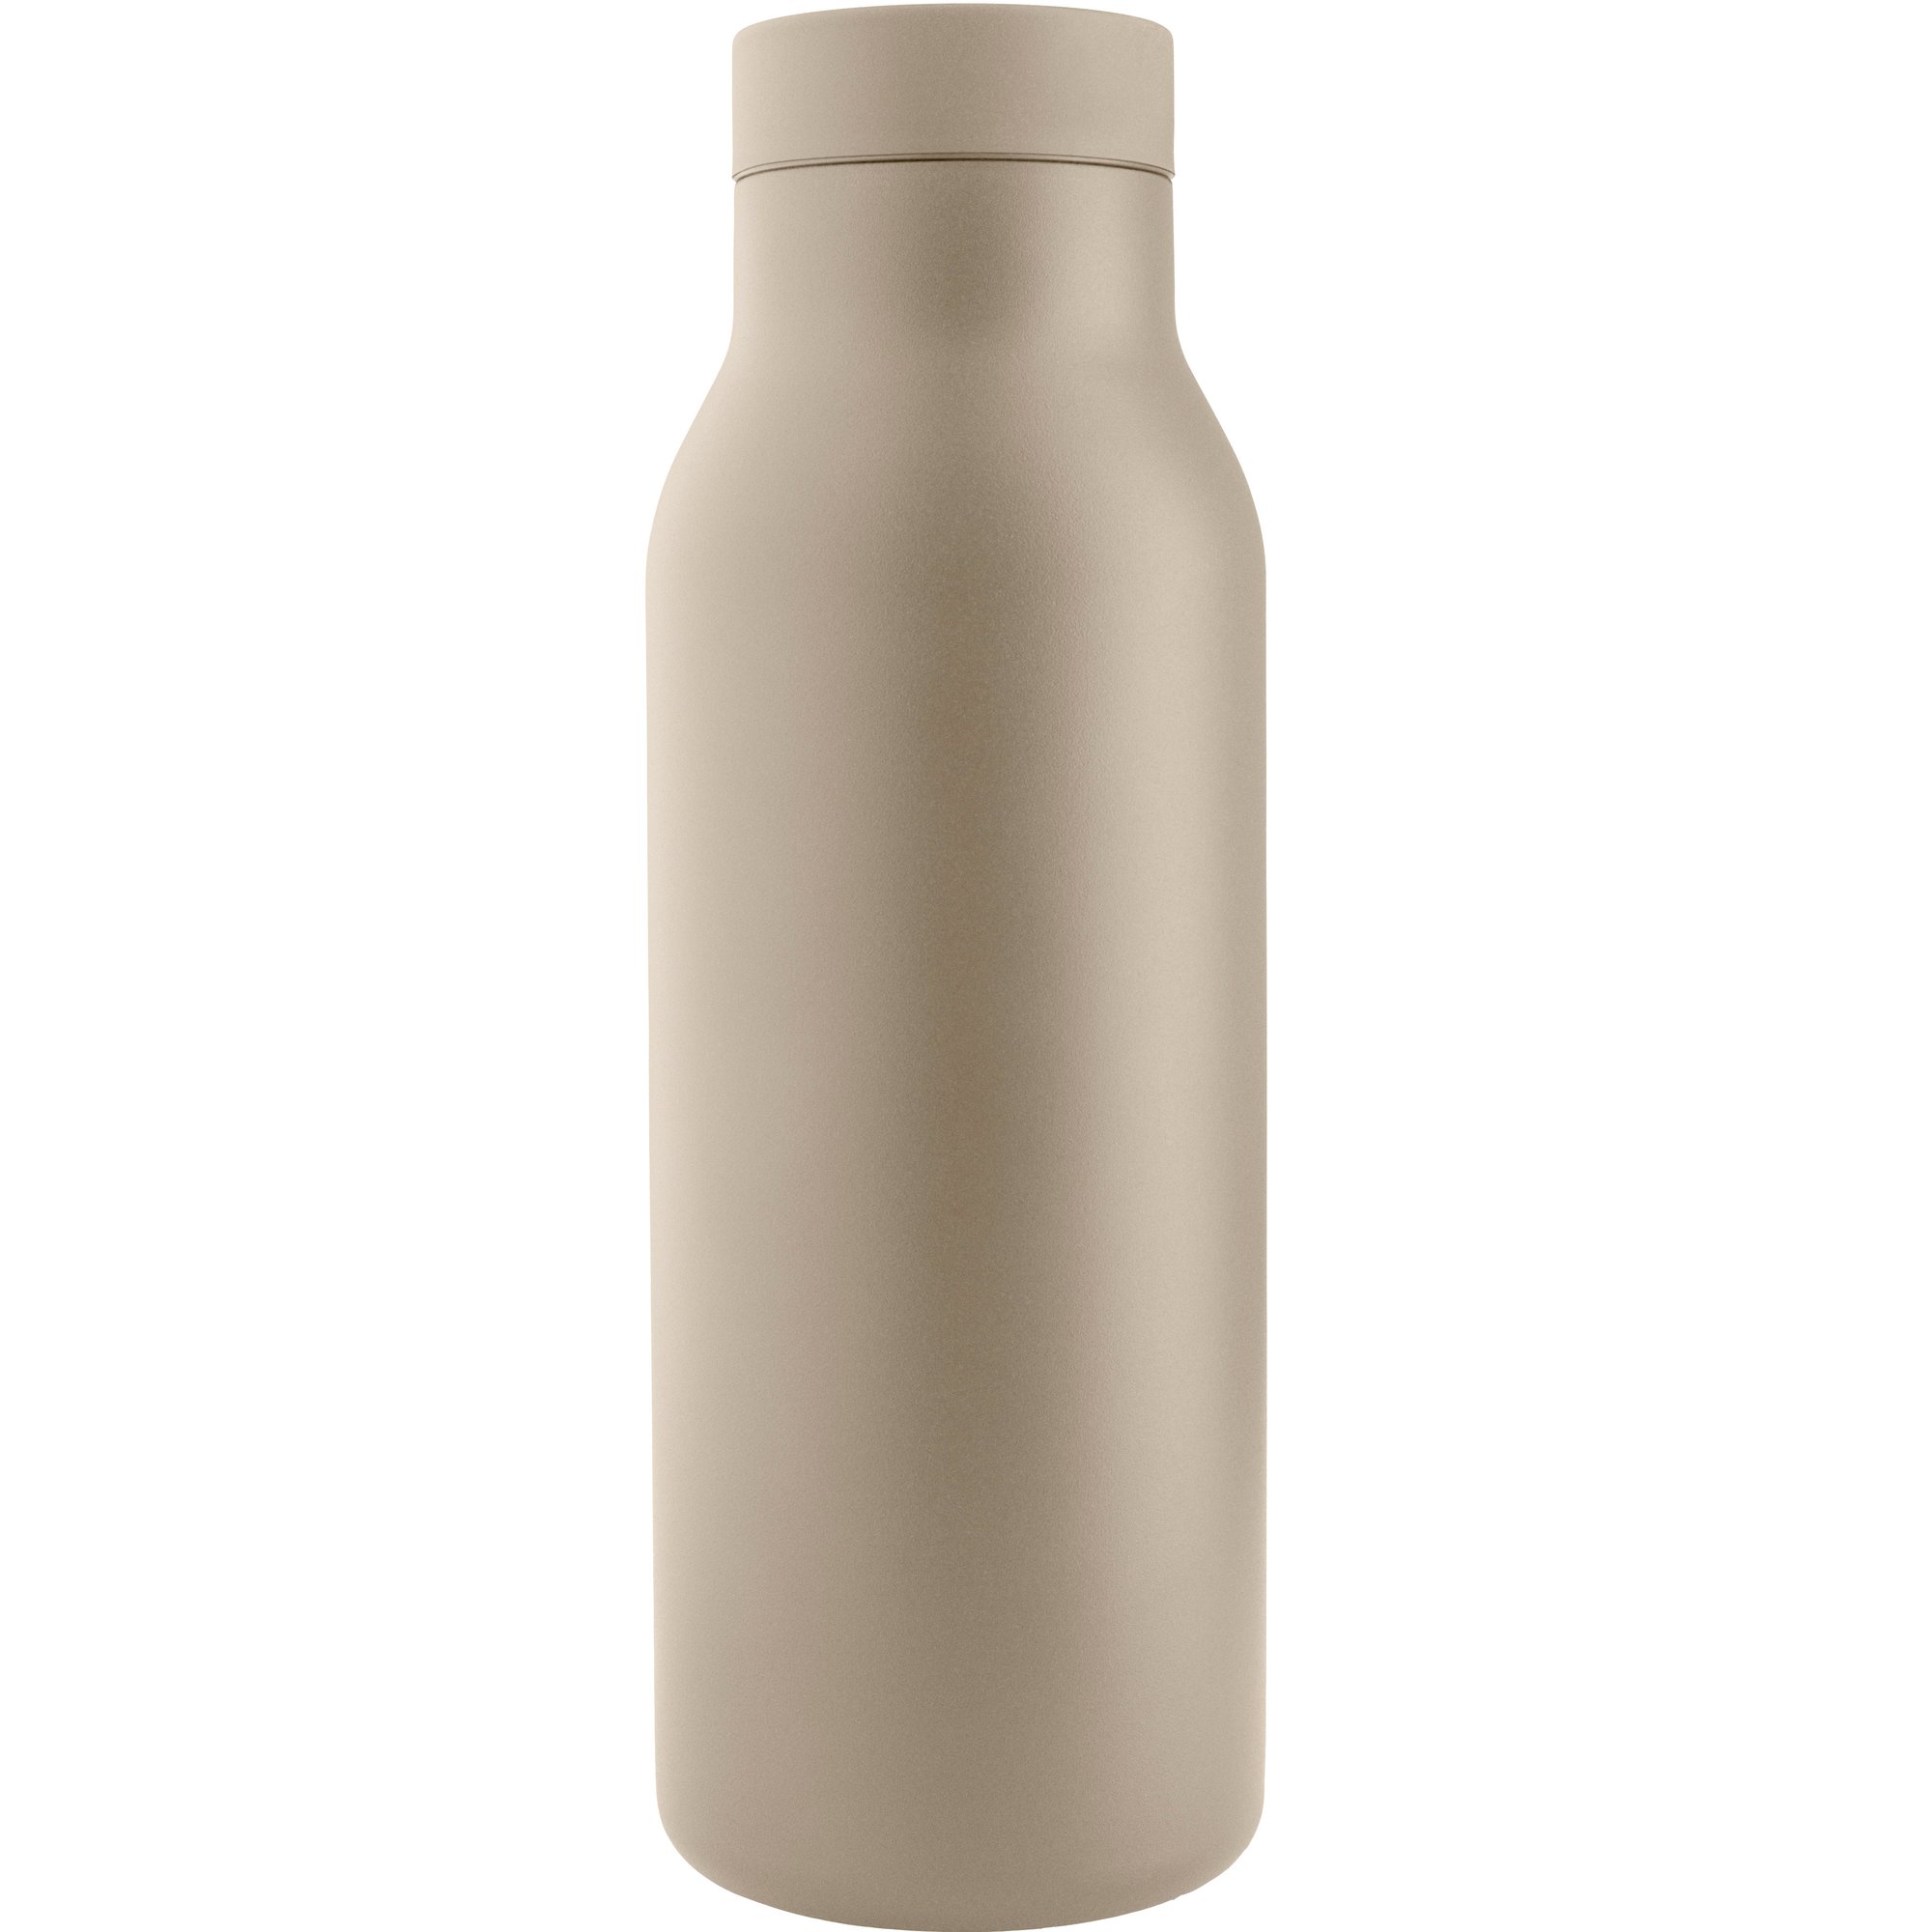 4: Eva Solo Urban termoflaske 0,5 liter, pearl beige